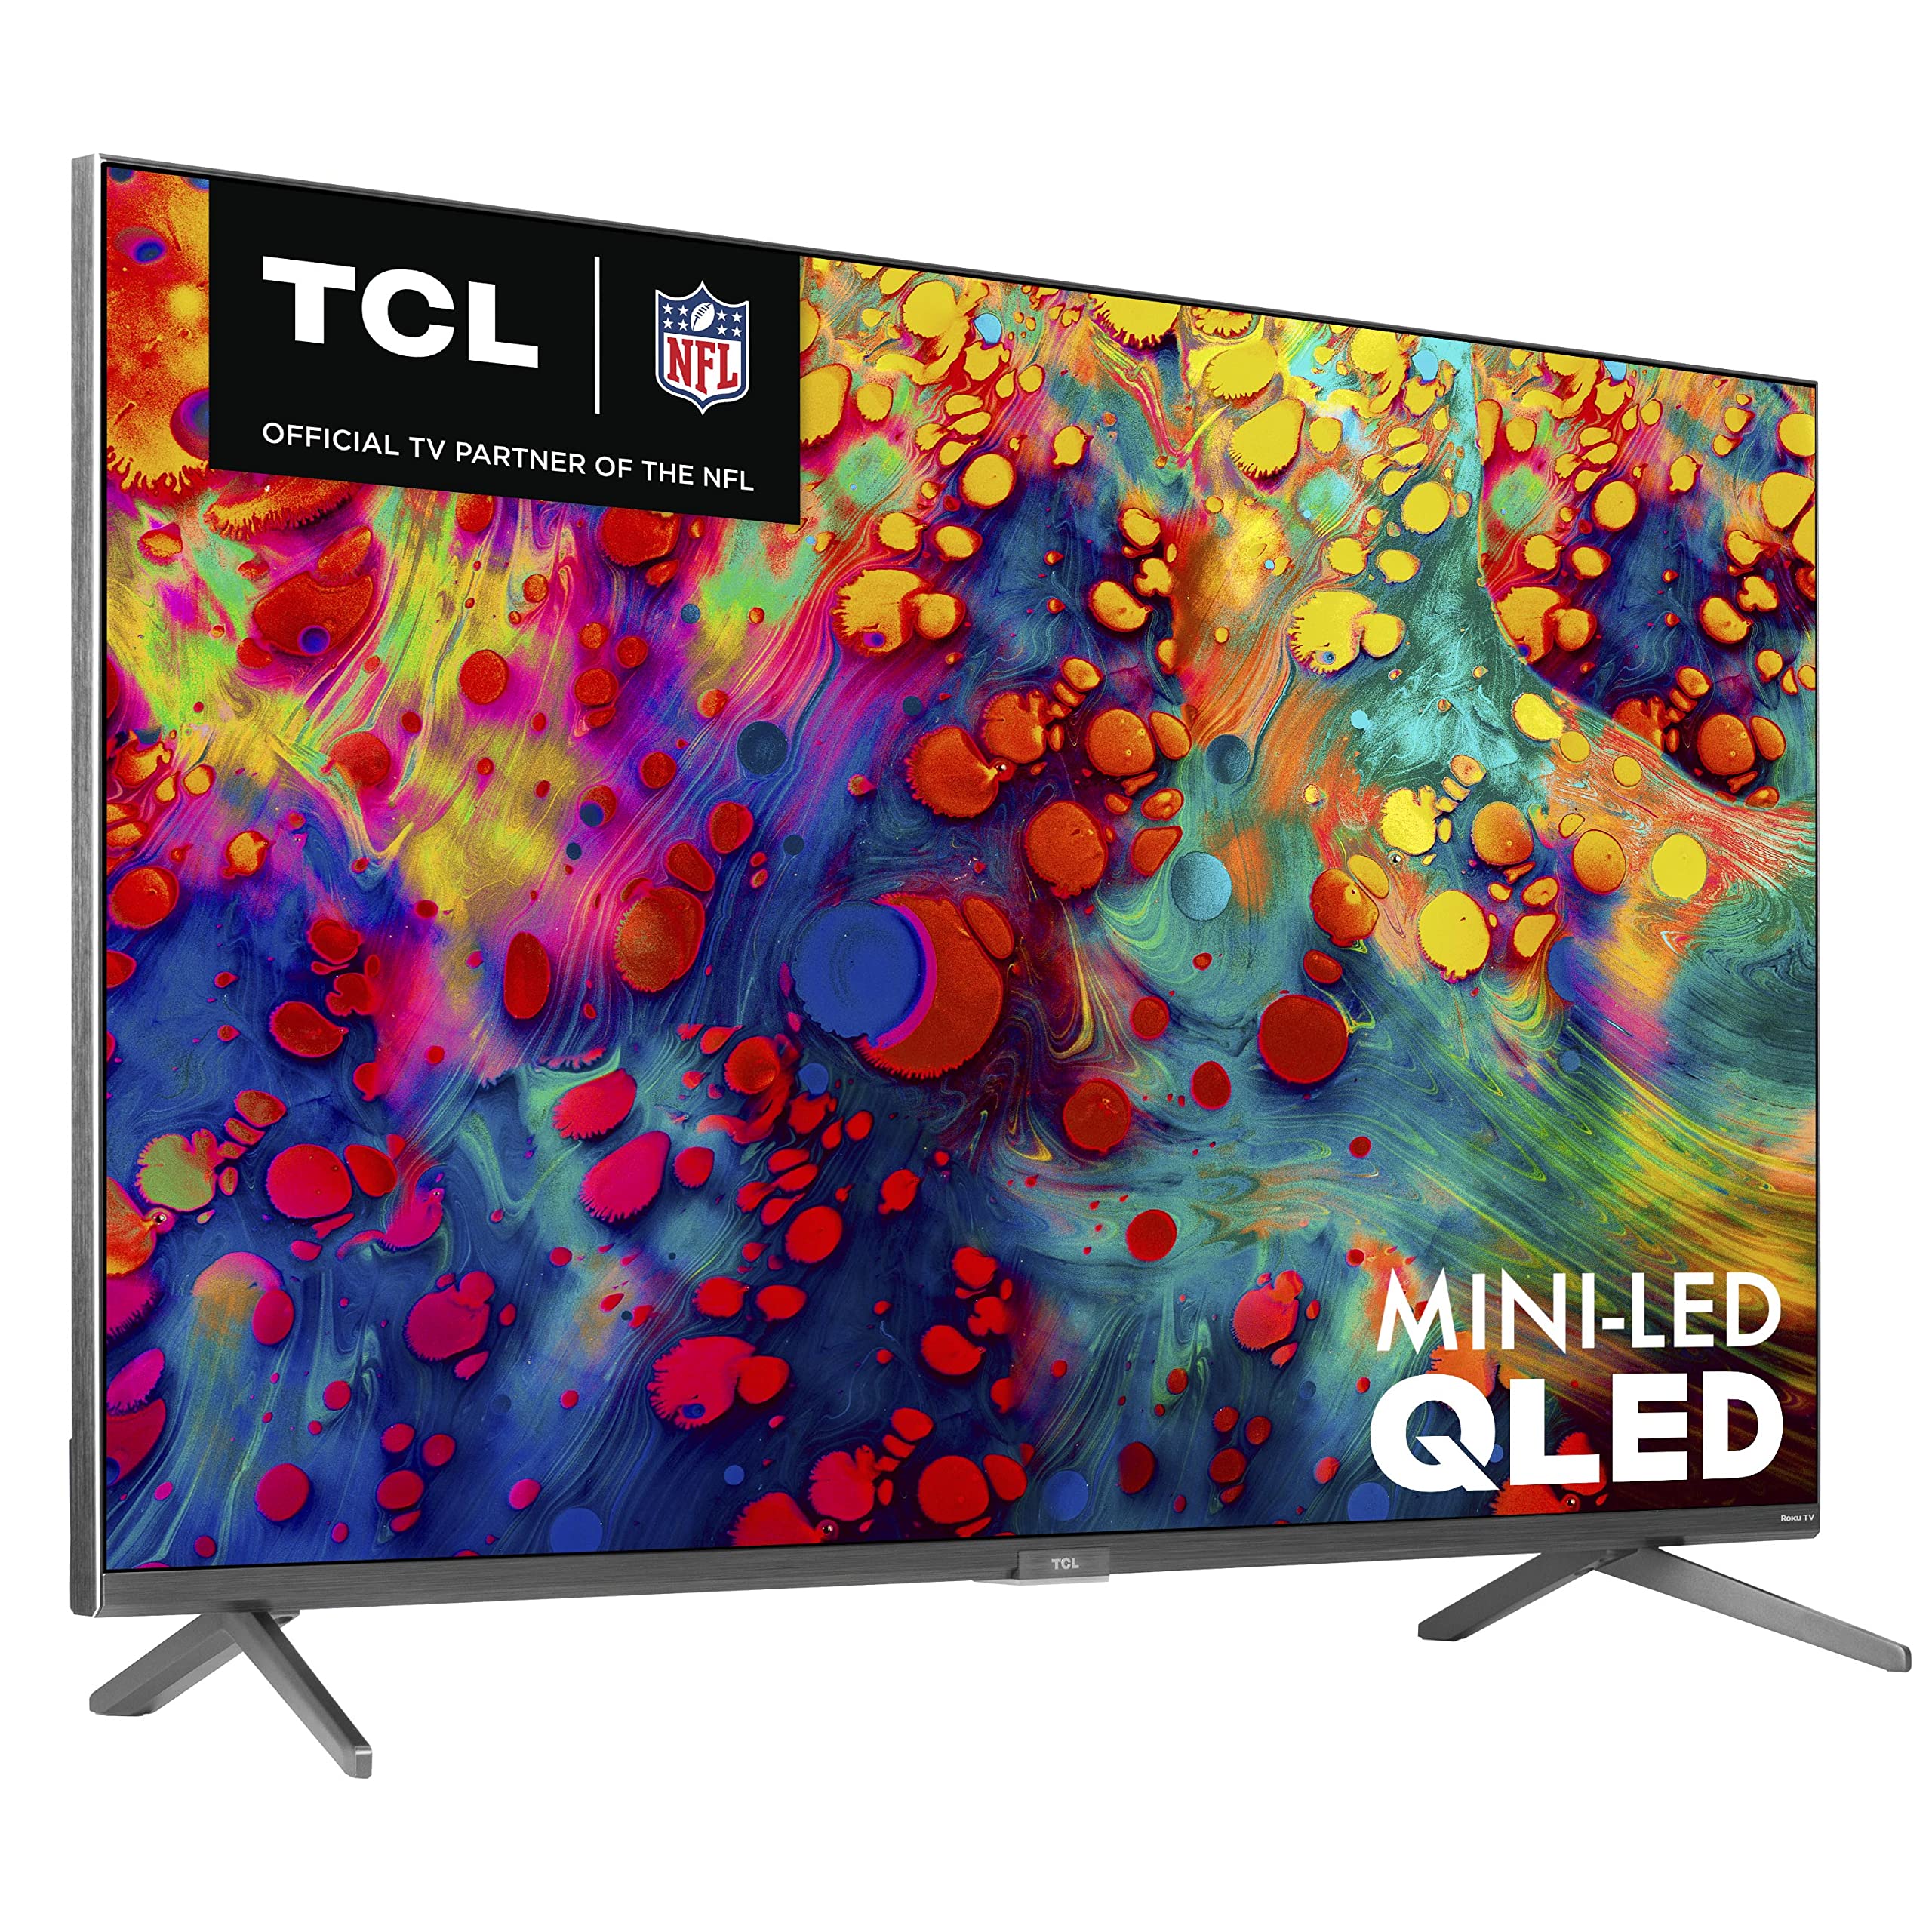 TCL 55-inch 6-Series 4K UHD Dolby Vision HDR QLED Roku Smart TV - 55R635, 2021 Model , Black